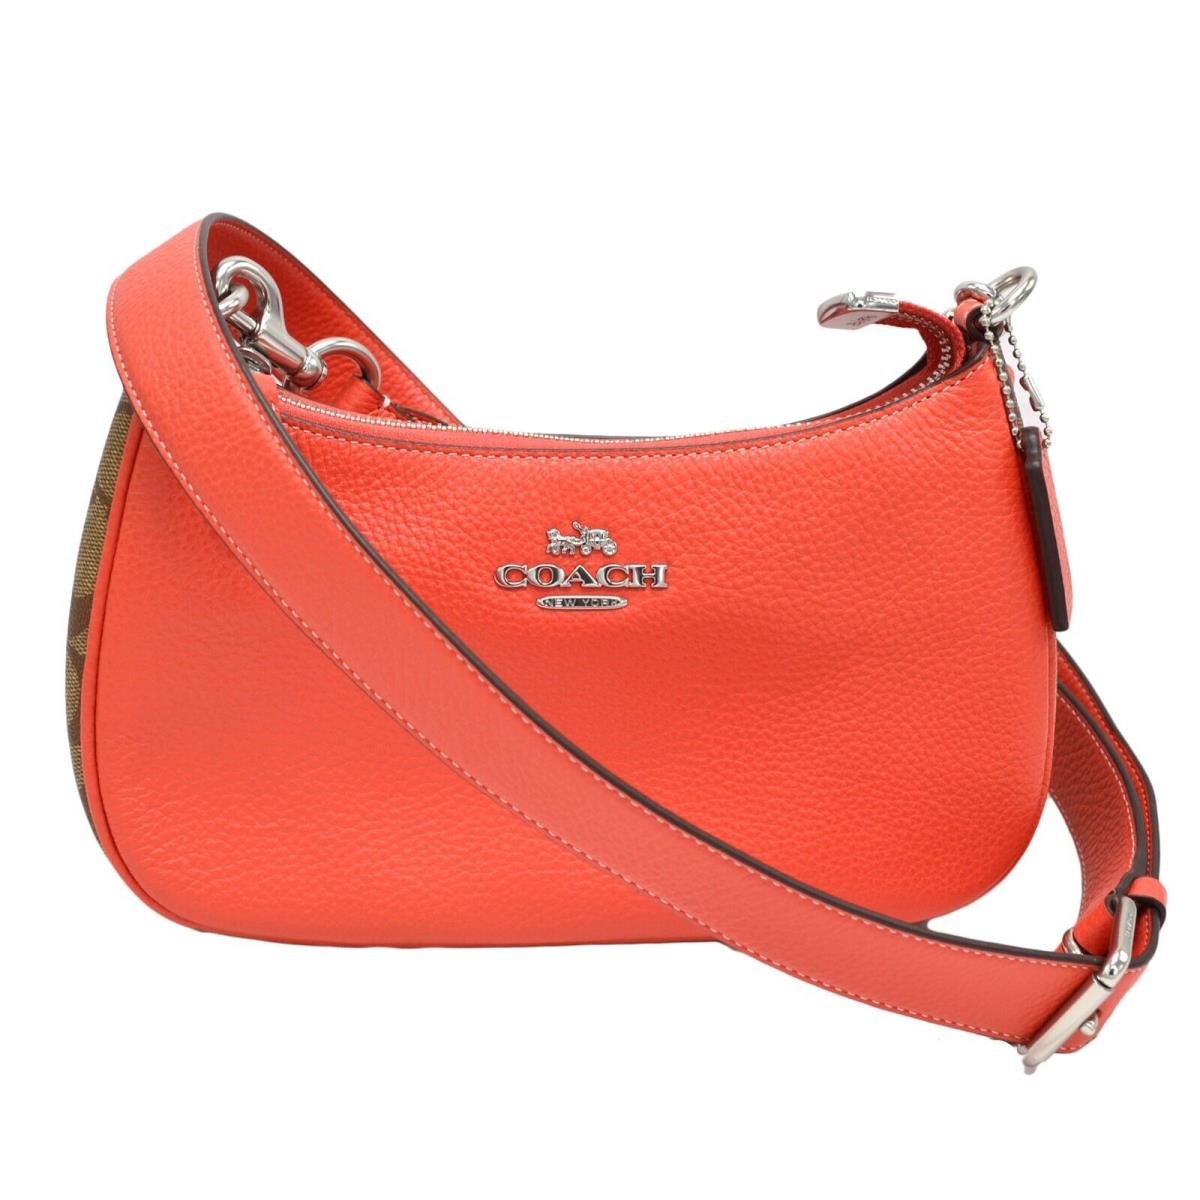 Coach Women`s Teri Shoulder Bag Crossbody Tote Purse Pebbled Leather Handbag - Handle/Strap: Orange, Hardware: Silver, Exterior: